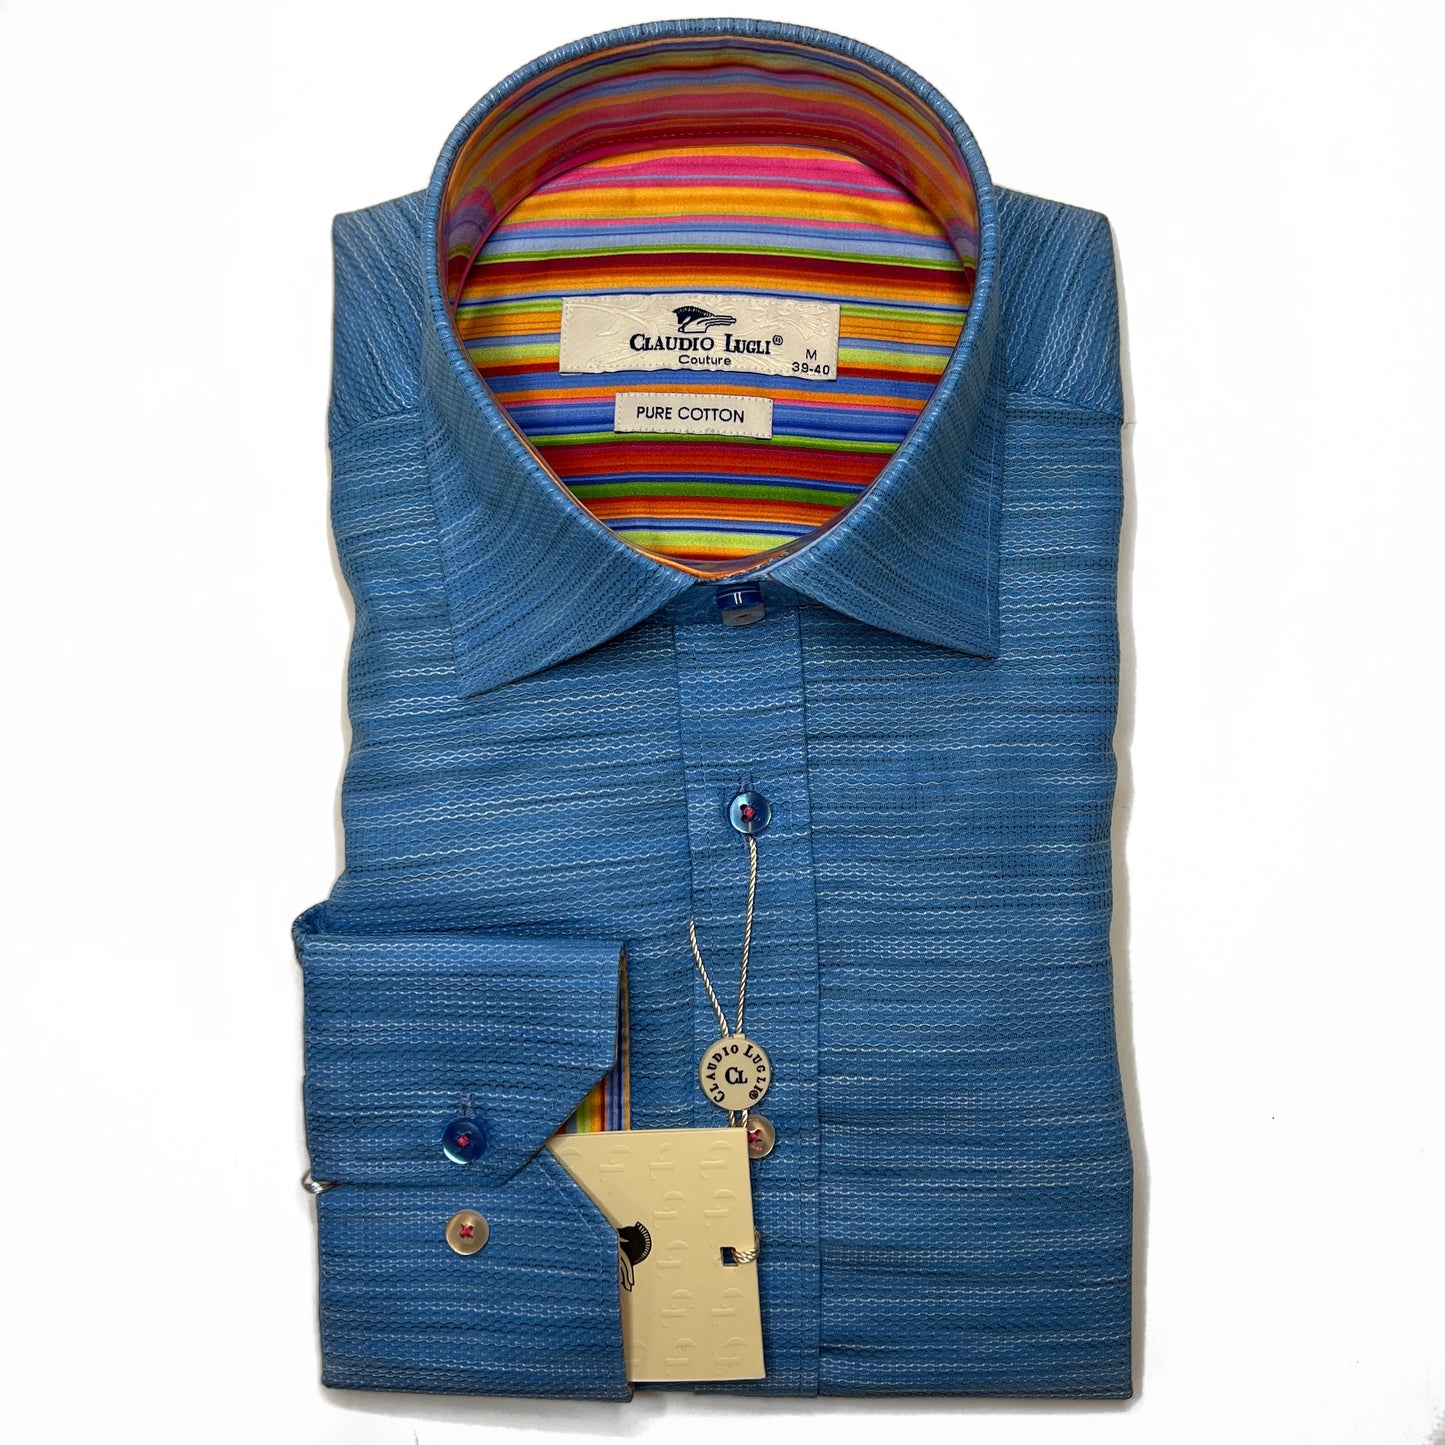 Claudio Lugli Men's Blue Texture Shirt - CP6864